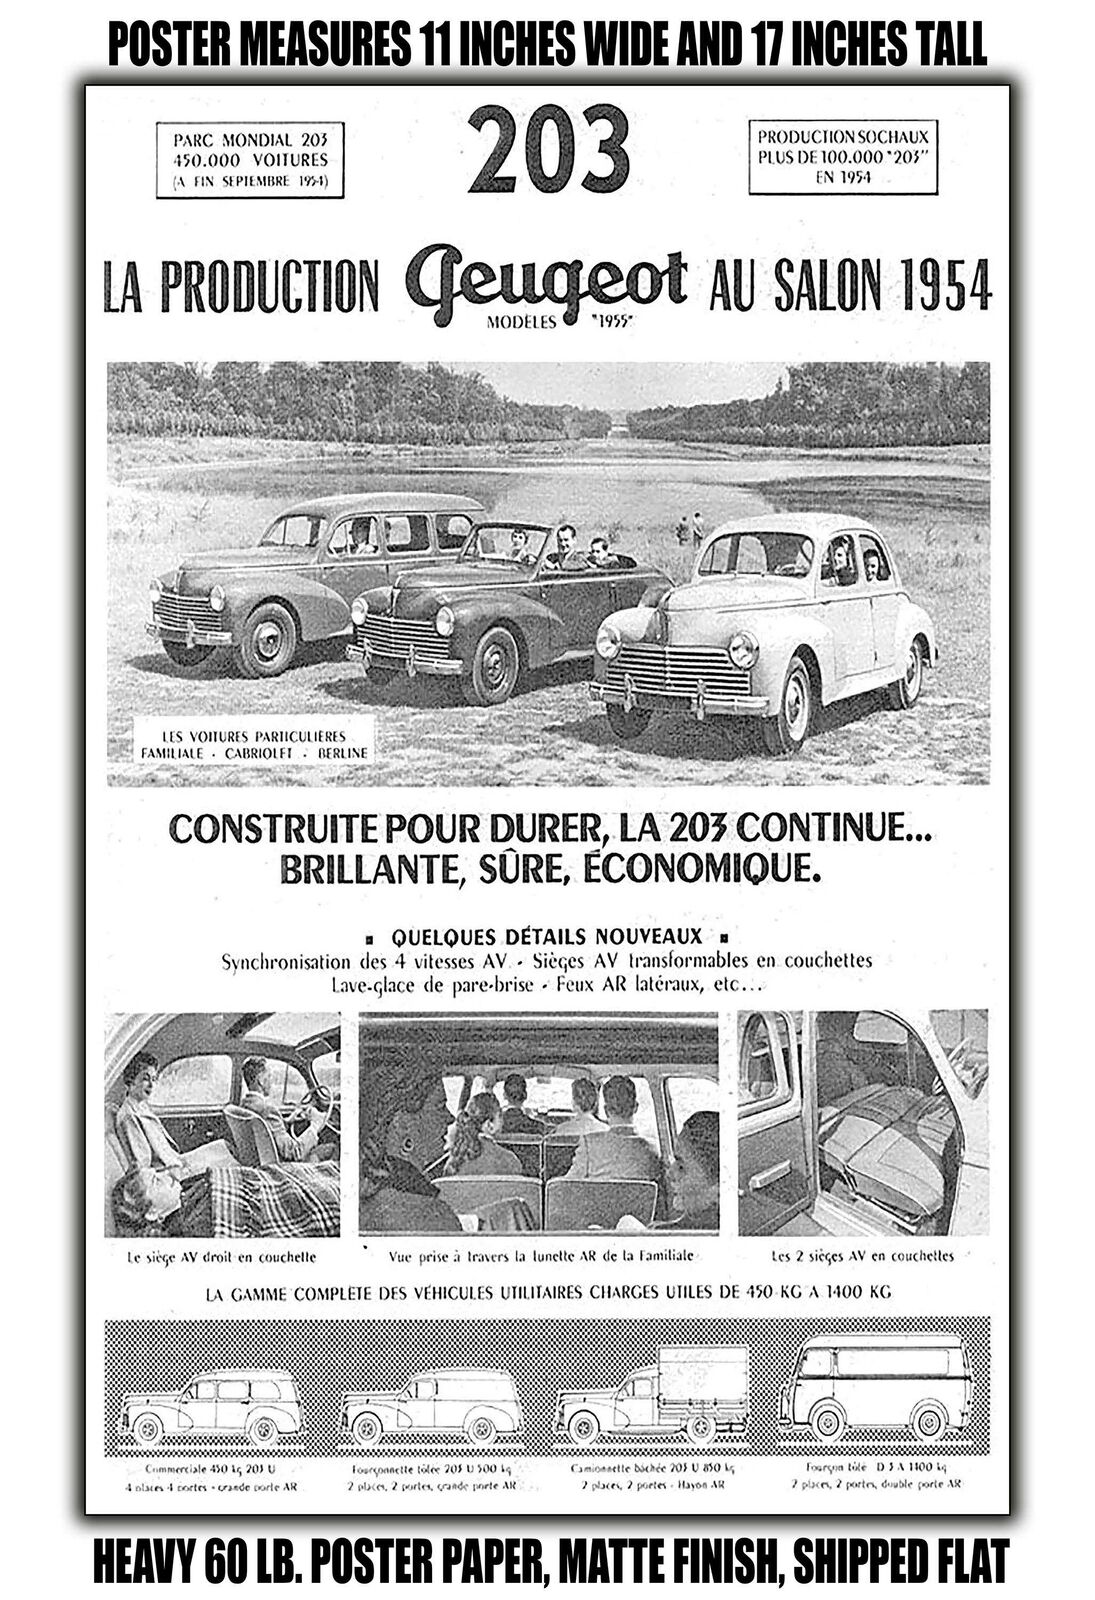 11x17 POSTER - 1954 Peugeot 203 Peugeot Production Models 1955 At the 1954 Salon